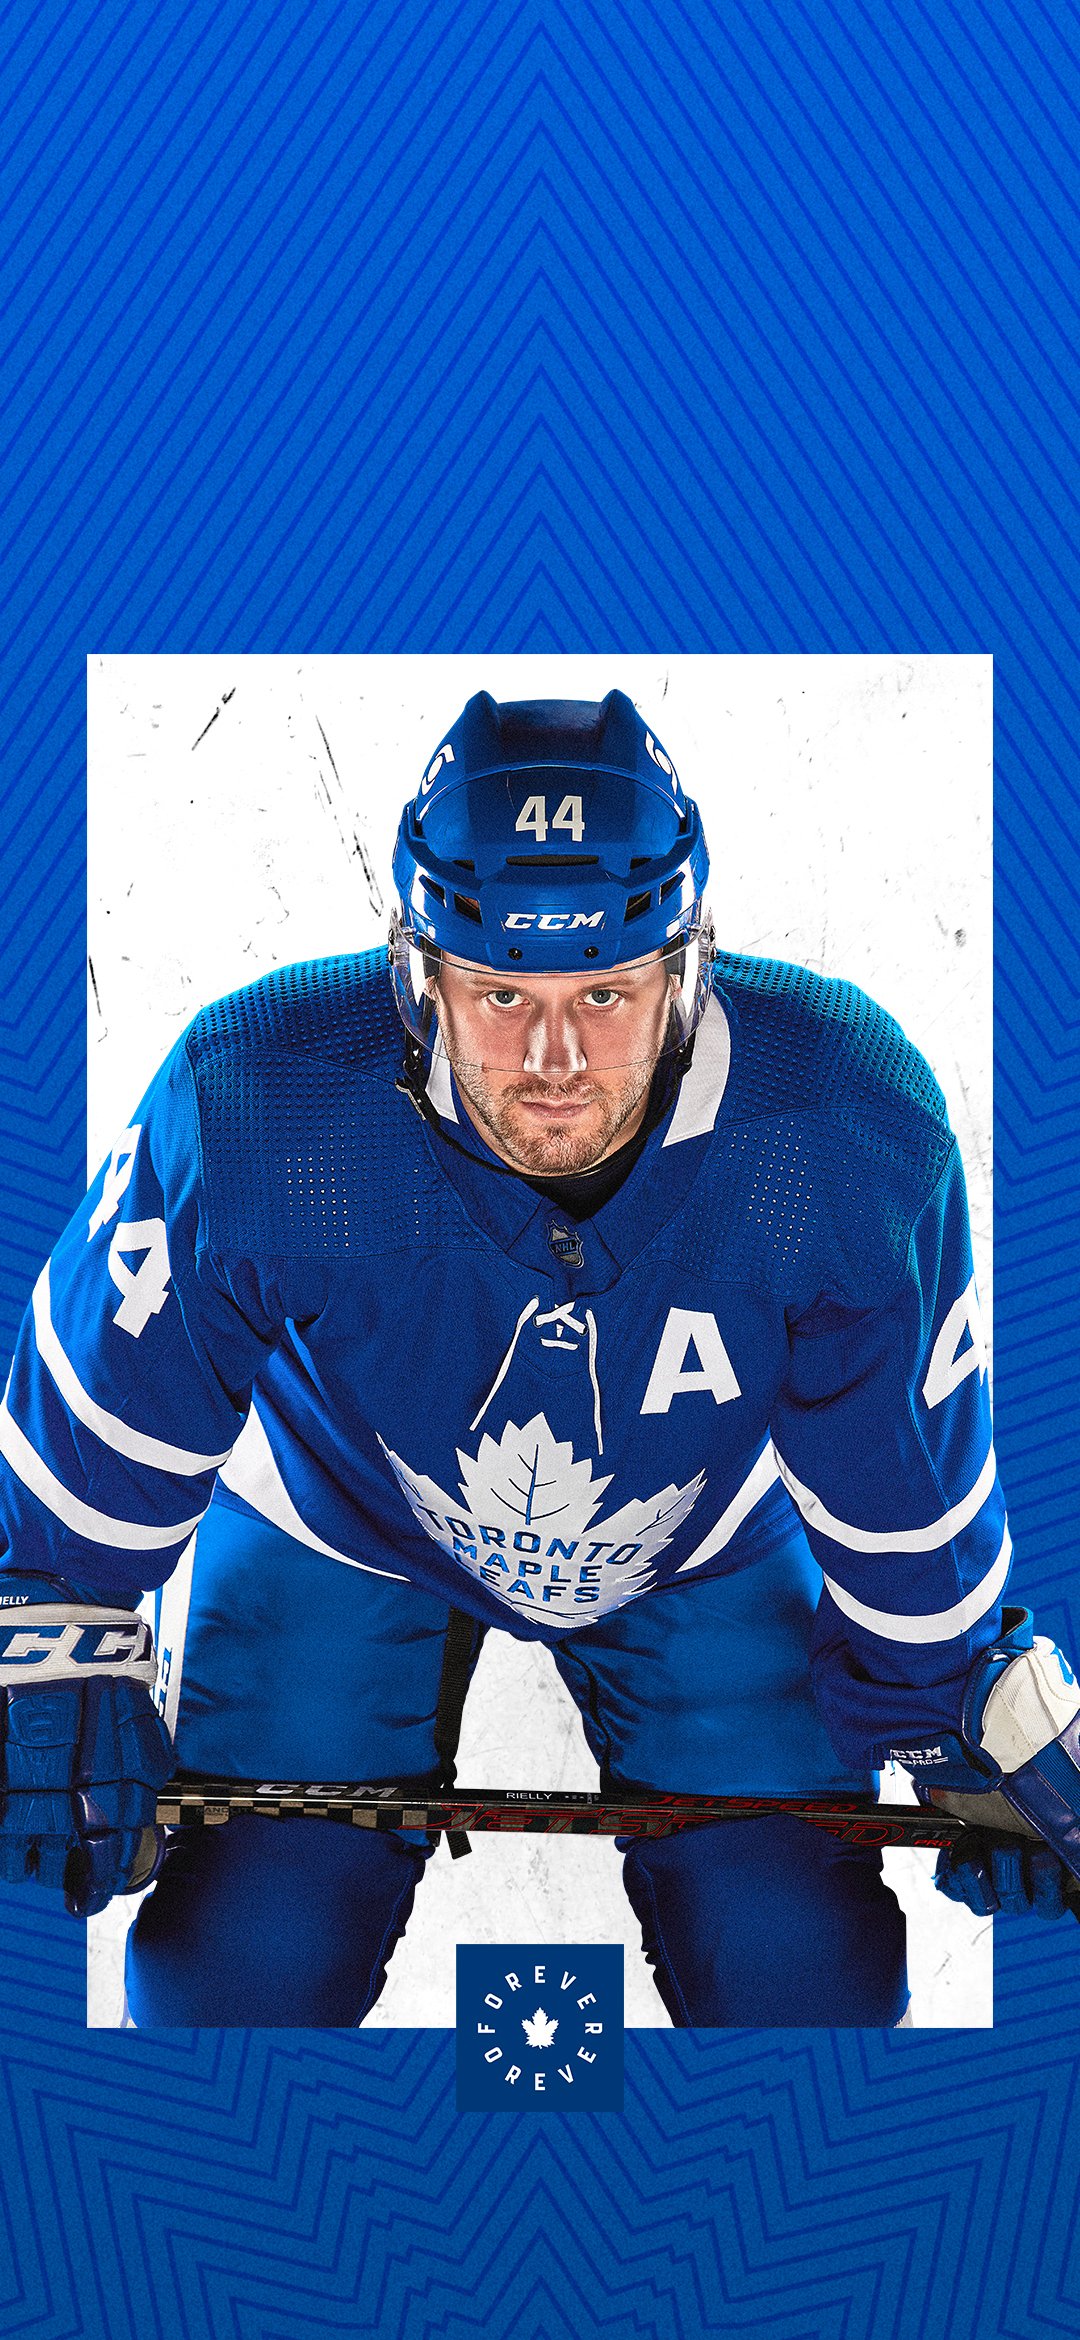 All sizes, Toronto Maple Leafs (NHL) iPhone X/XS/XR Lock Screen Wallpaper, Flickr - Photo Sha…